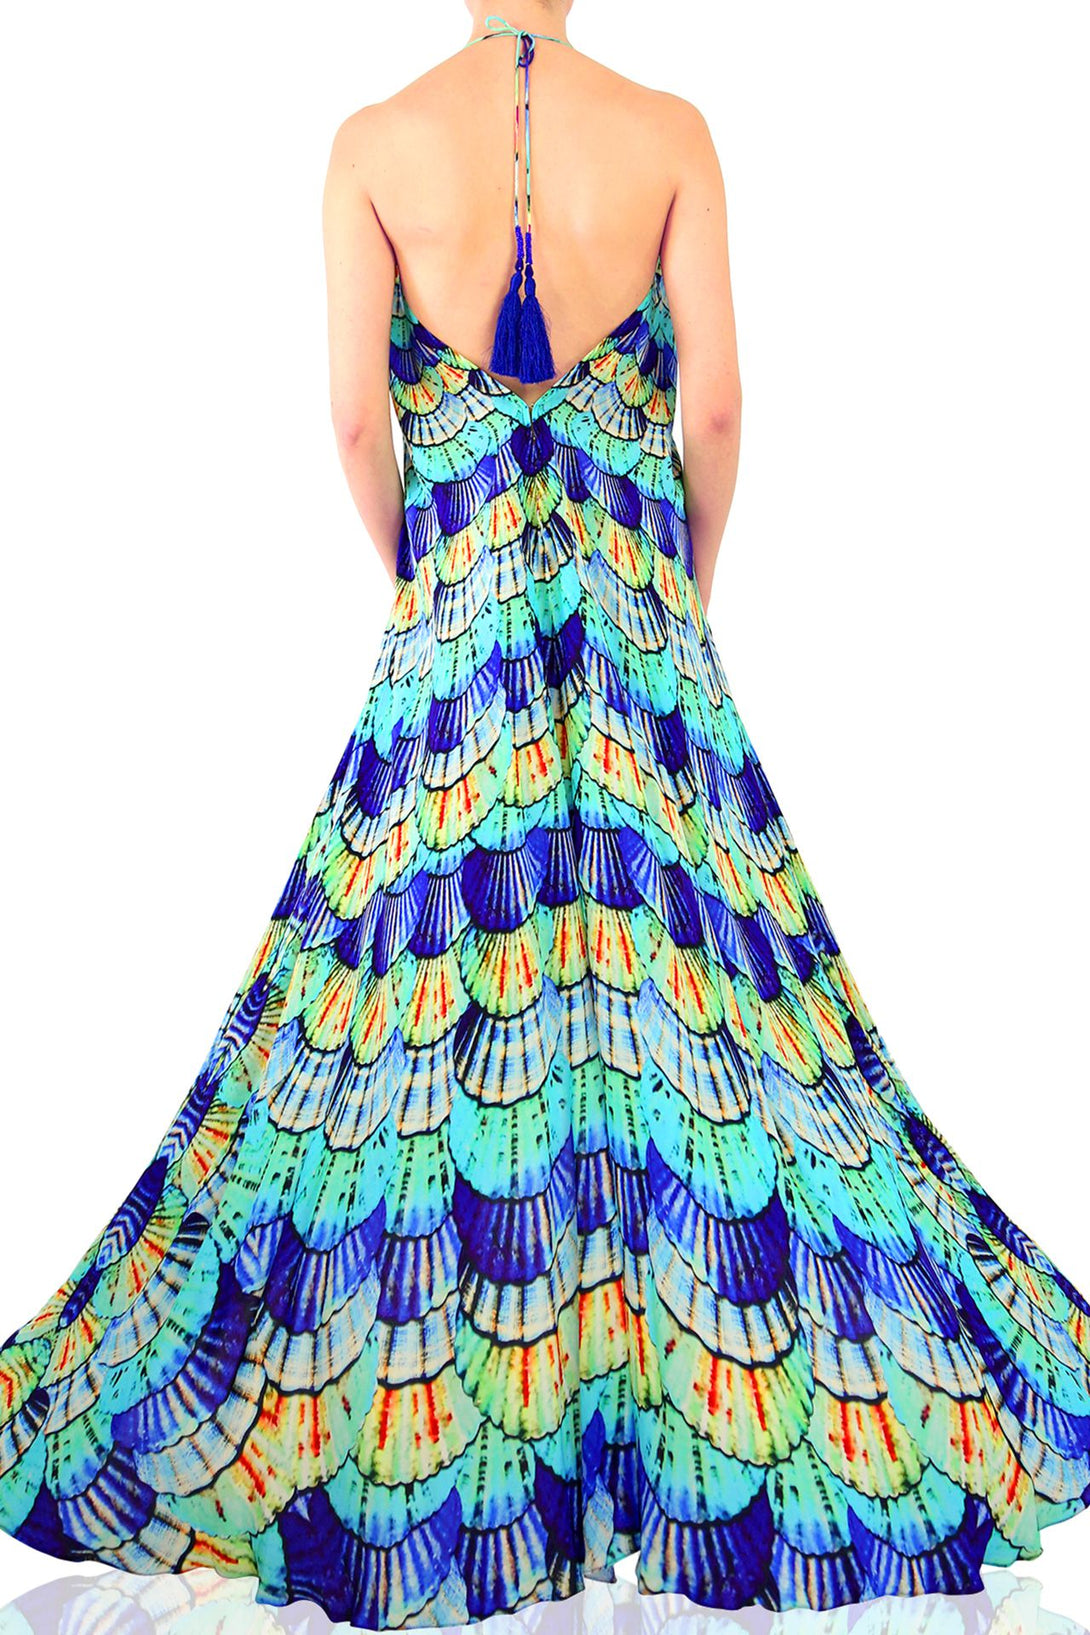 "long formal dresses" "backless maxi dress" "Shahida Parides" "blue evening dress"